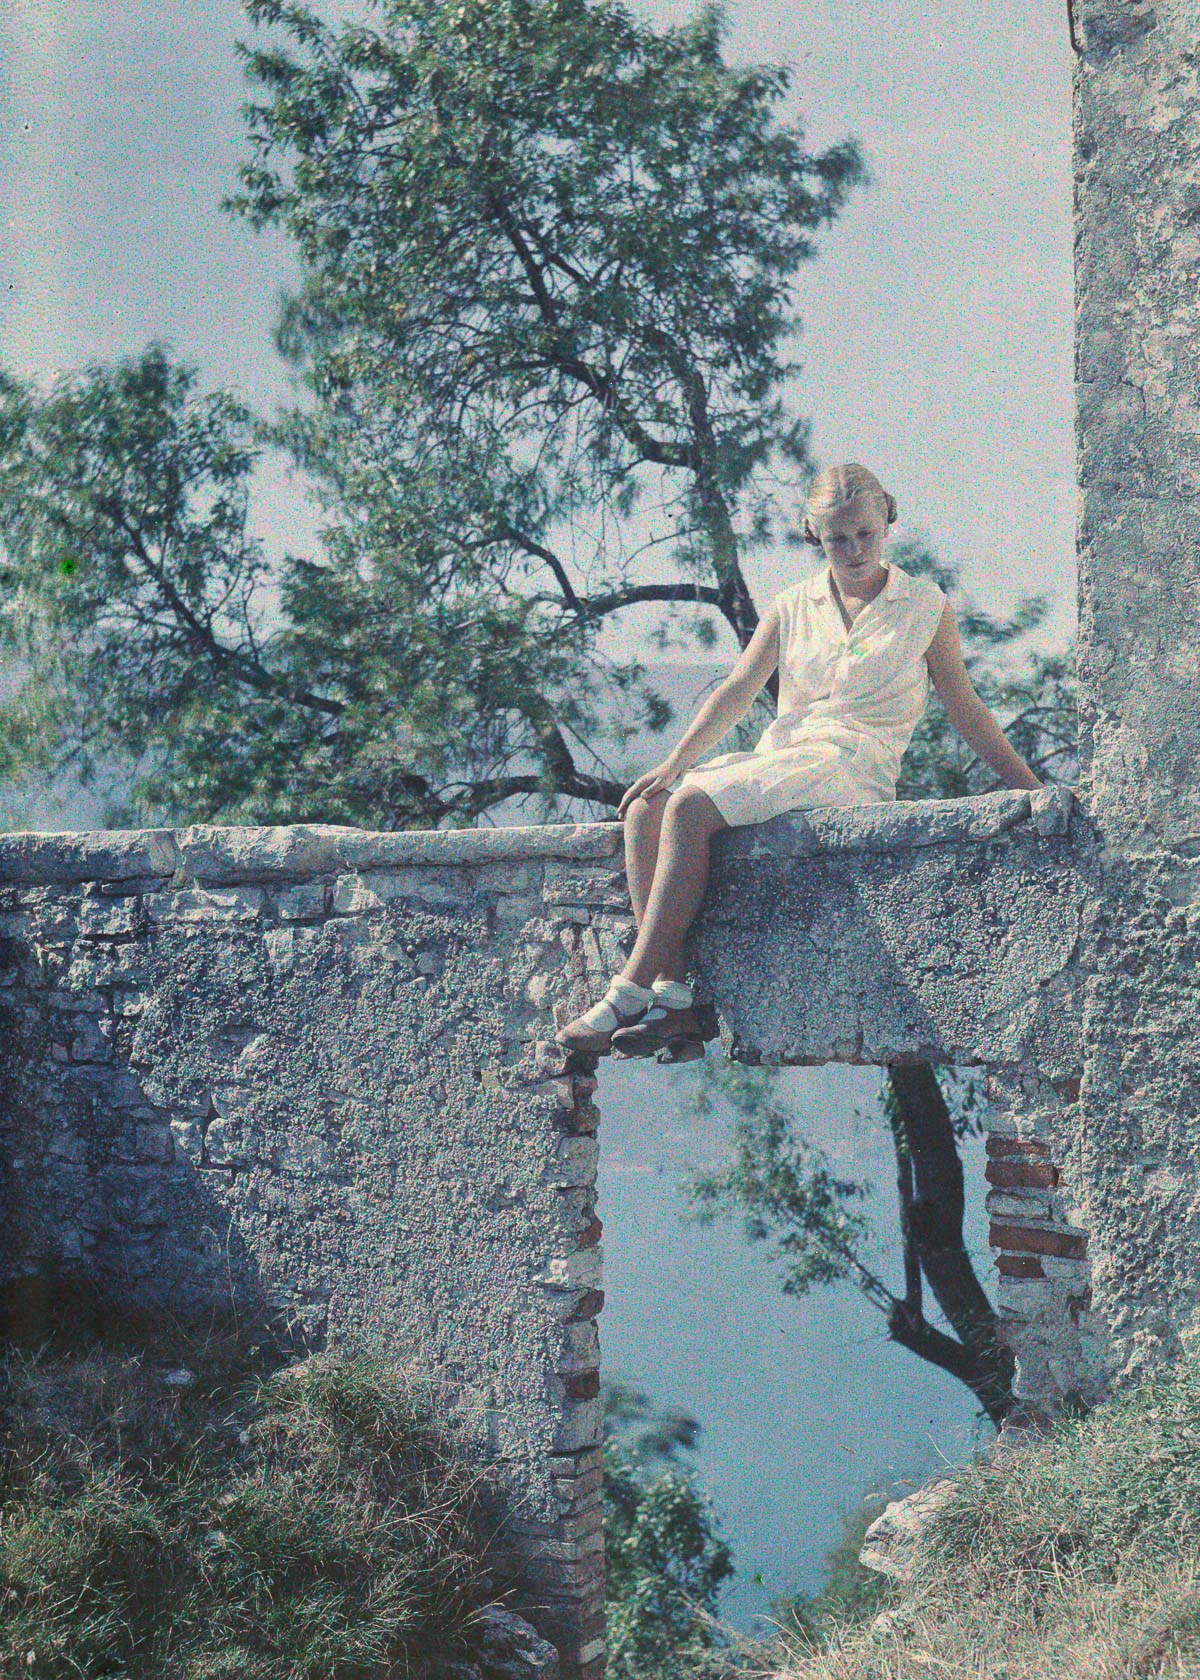 Eva Paneth at Lake Garda, Italy.c. 1930